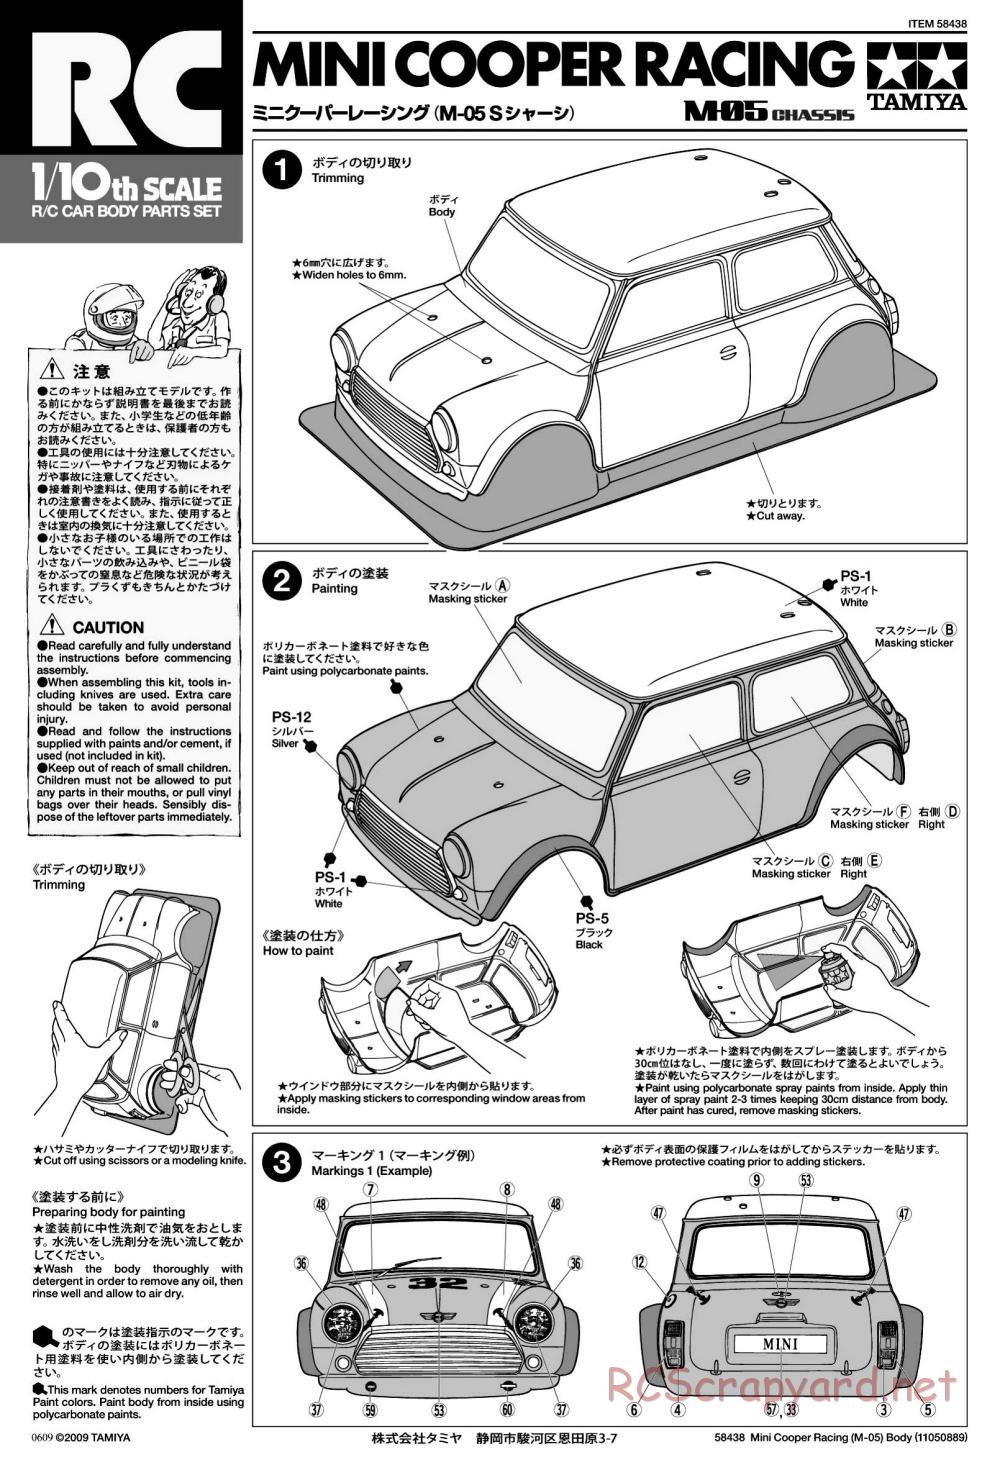 Tamiya - Mini Cooper Racing - M-05 Chassis - Body Manual - Page 1